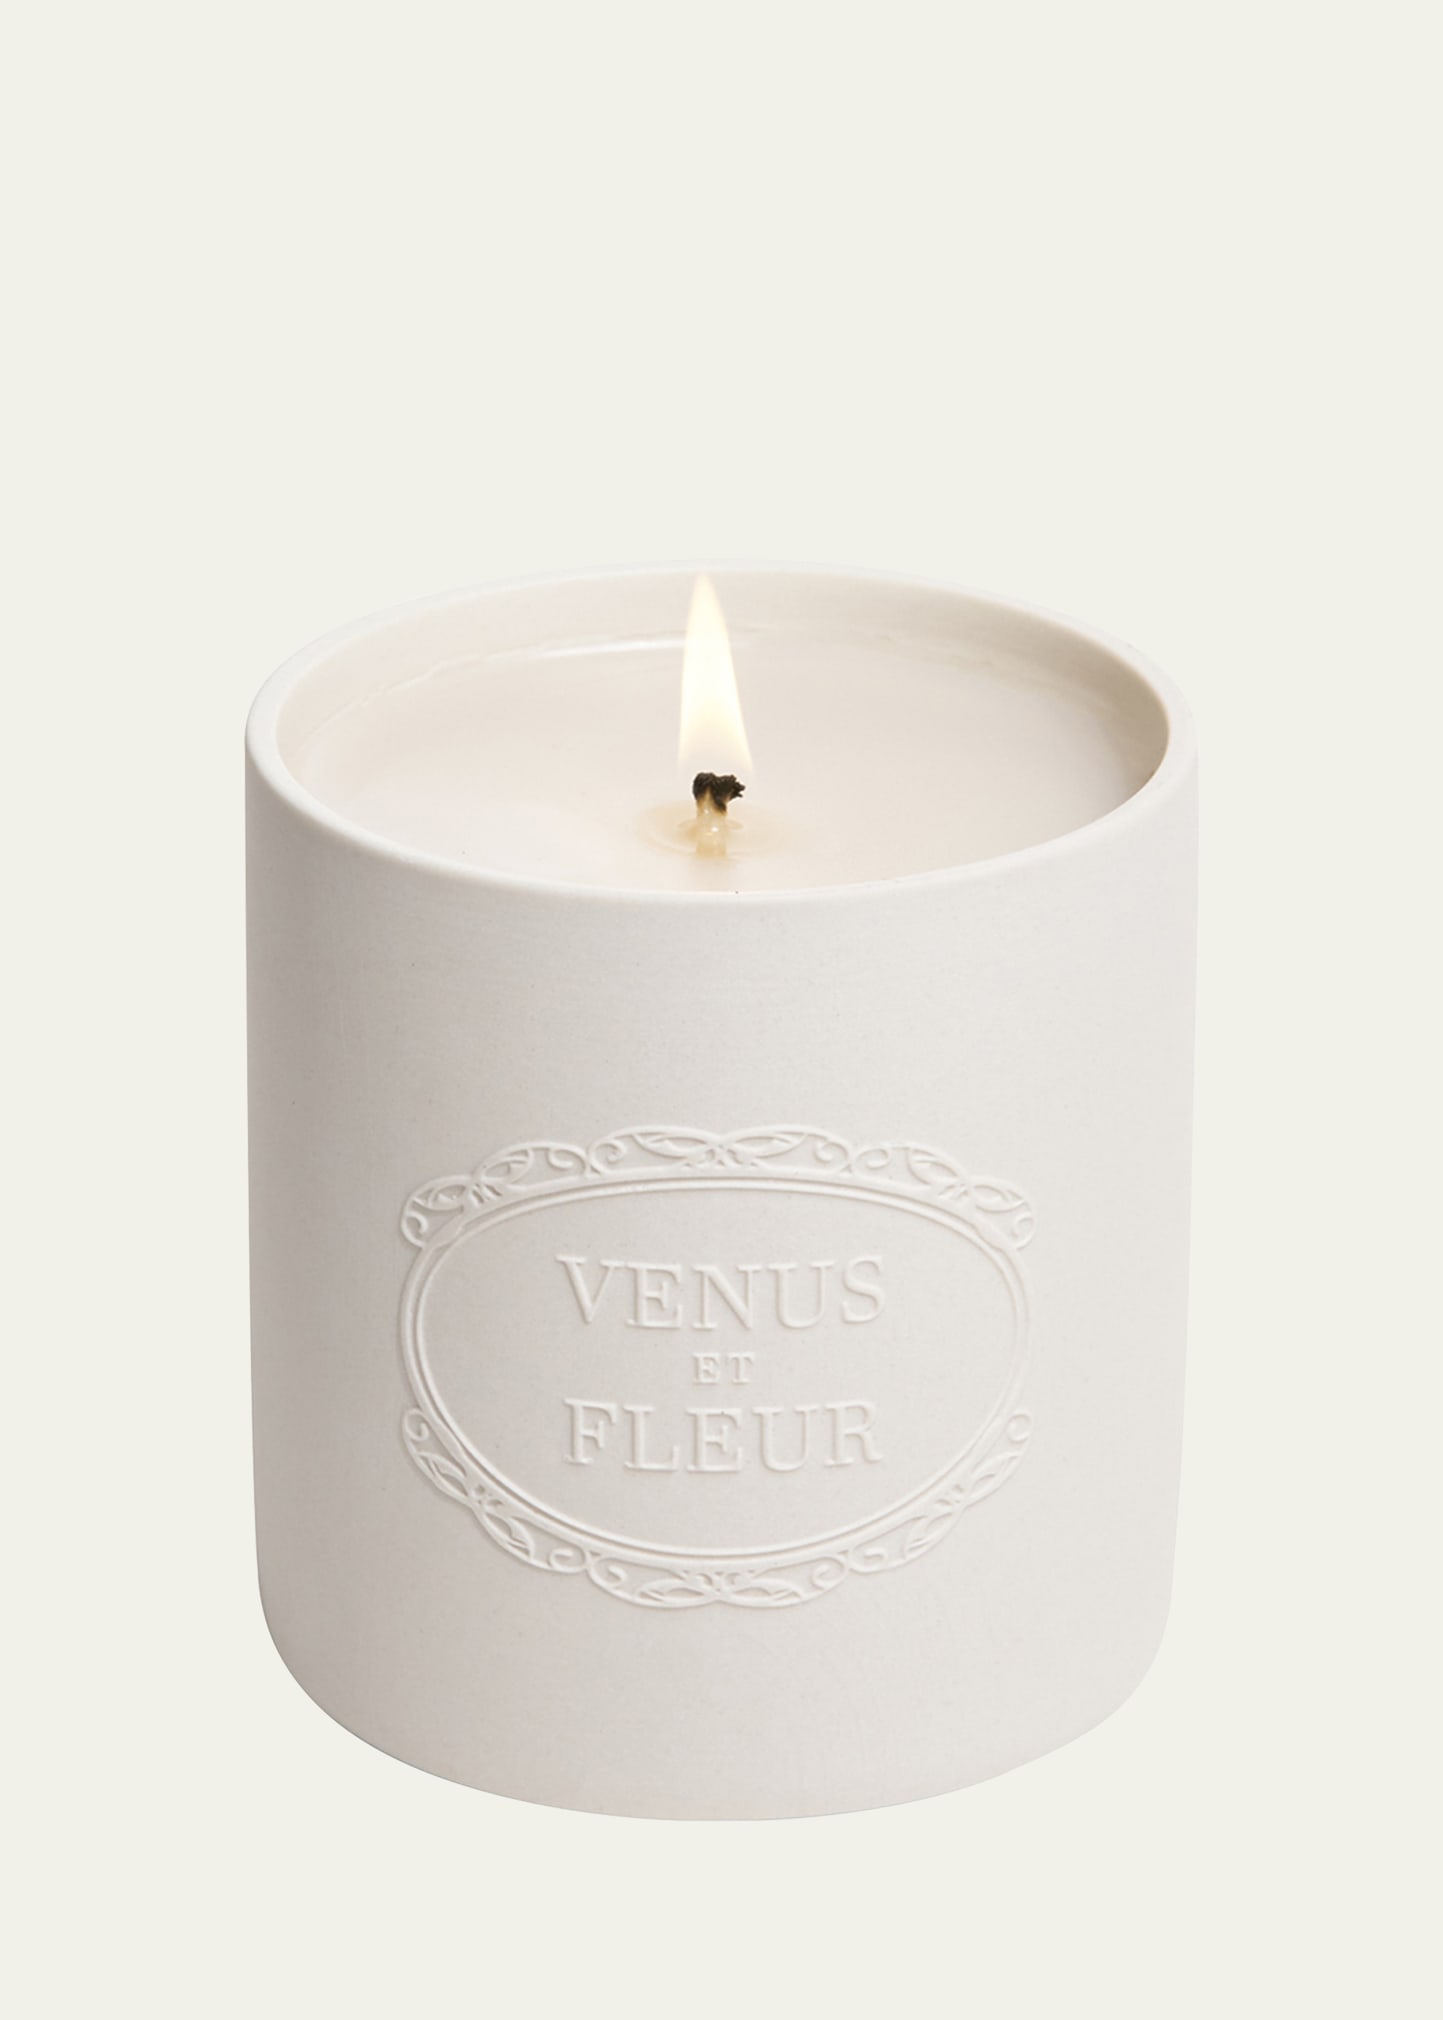 Venus Et Fleur Rose Blanche Porcelain Candle In White